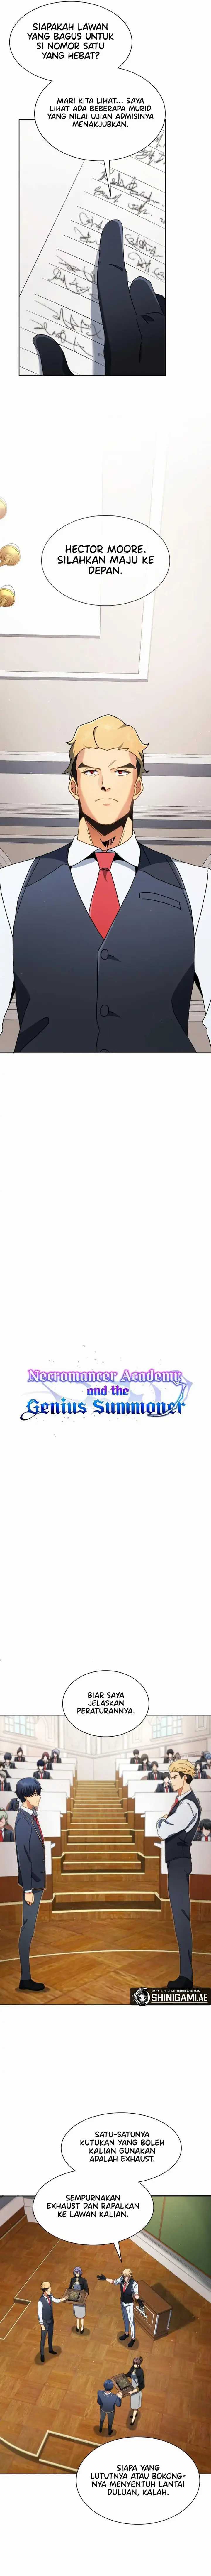 Necromancer Academy’s Genius Summoner Chapter 09 Image 3